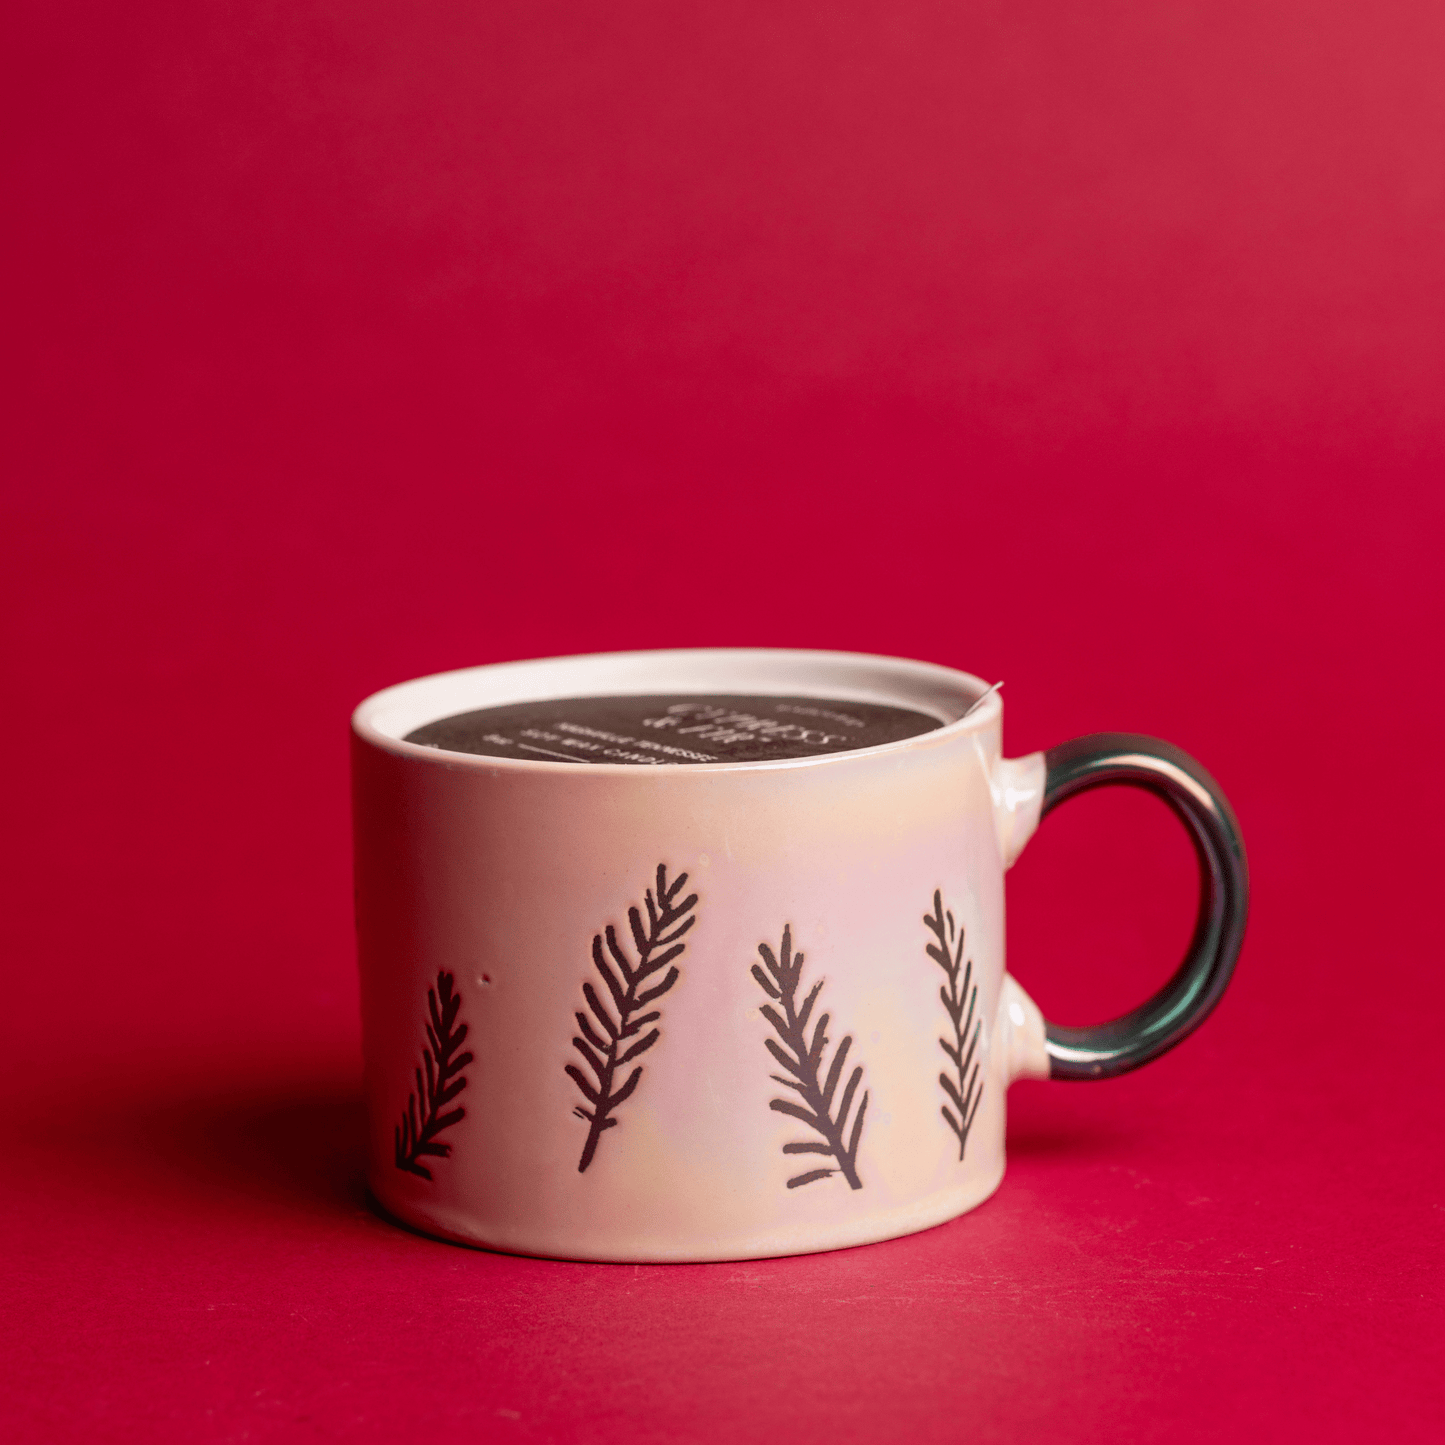 Cypress & Fir - 8oz White Ceramic Mug candle on a red background